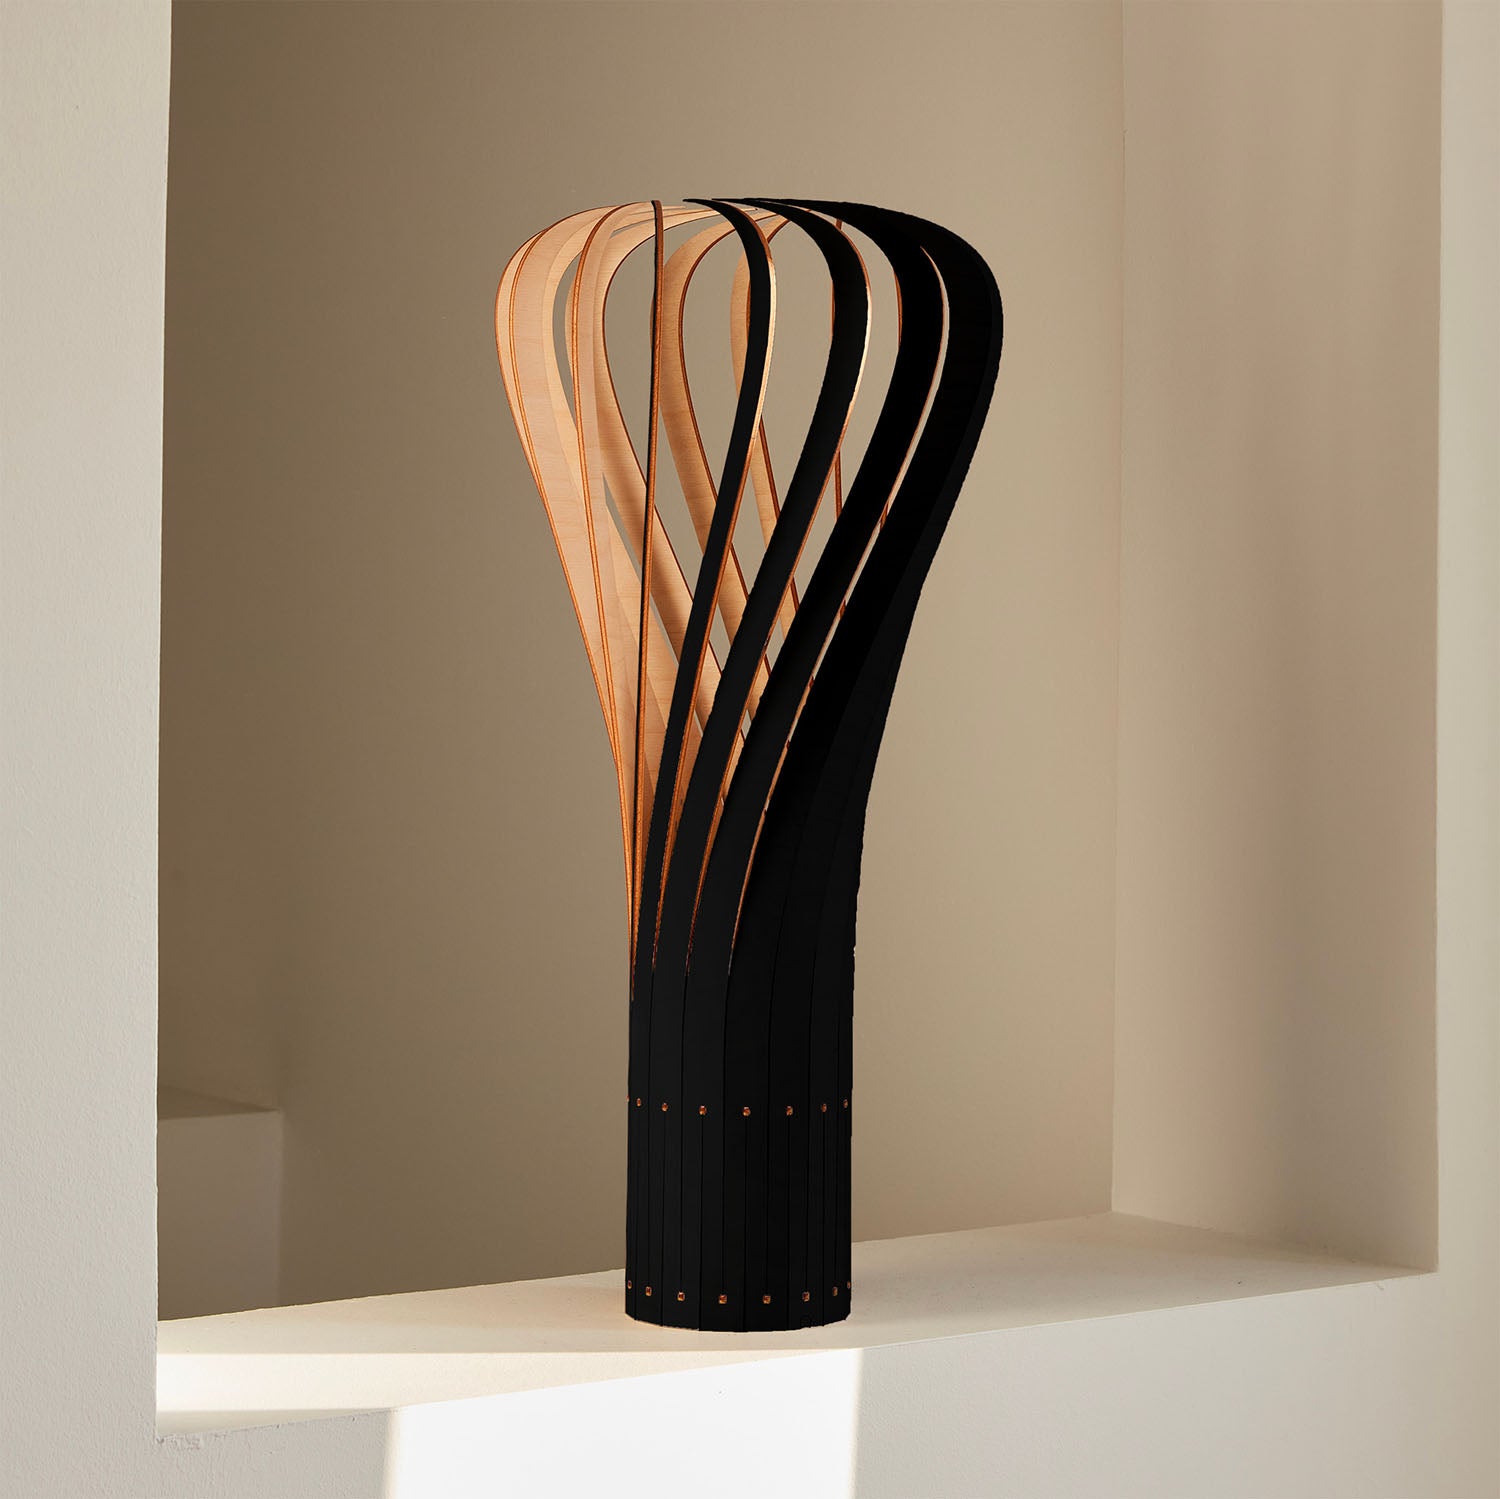 PUNTAKAPANEL - Lampe à poser en bois torsadé design